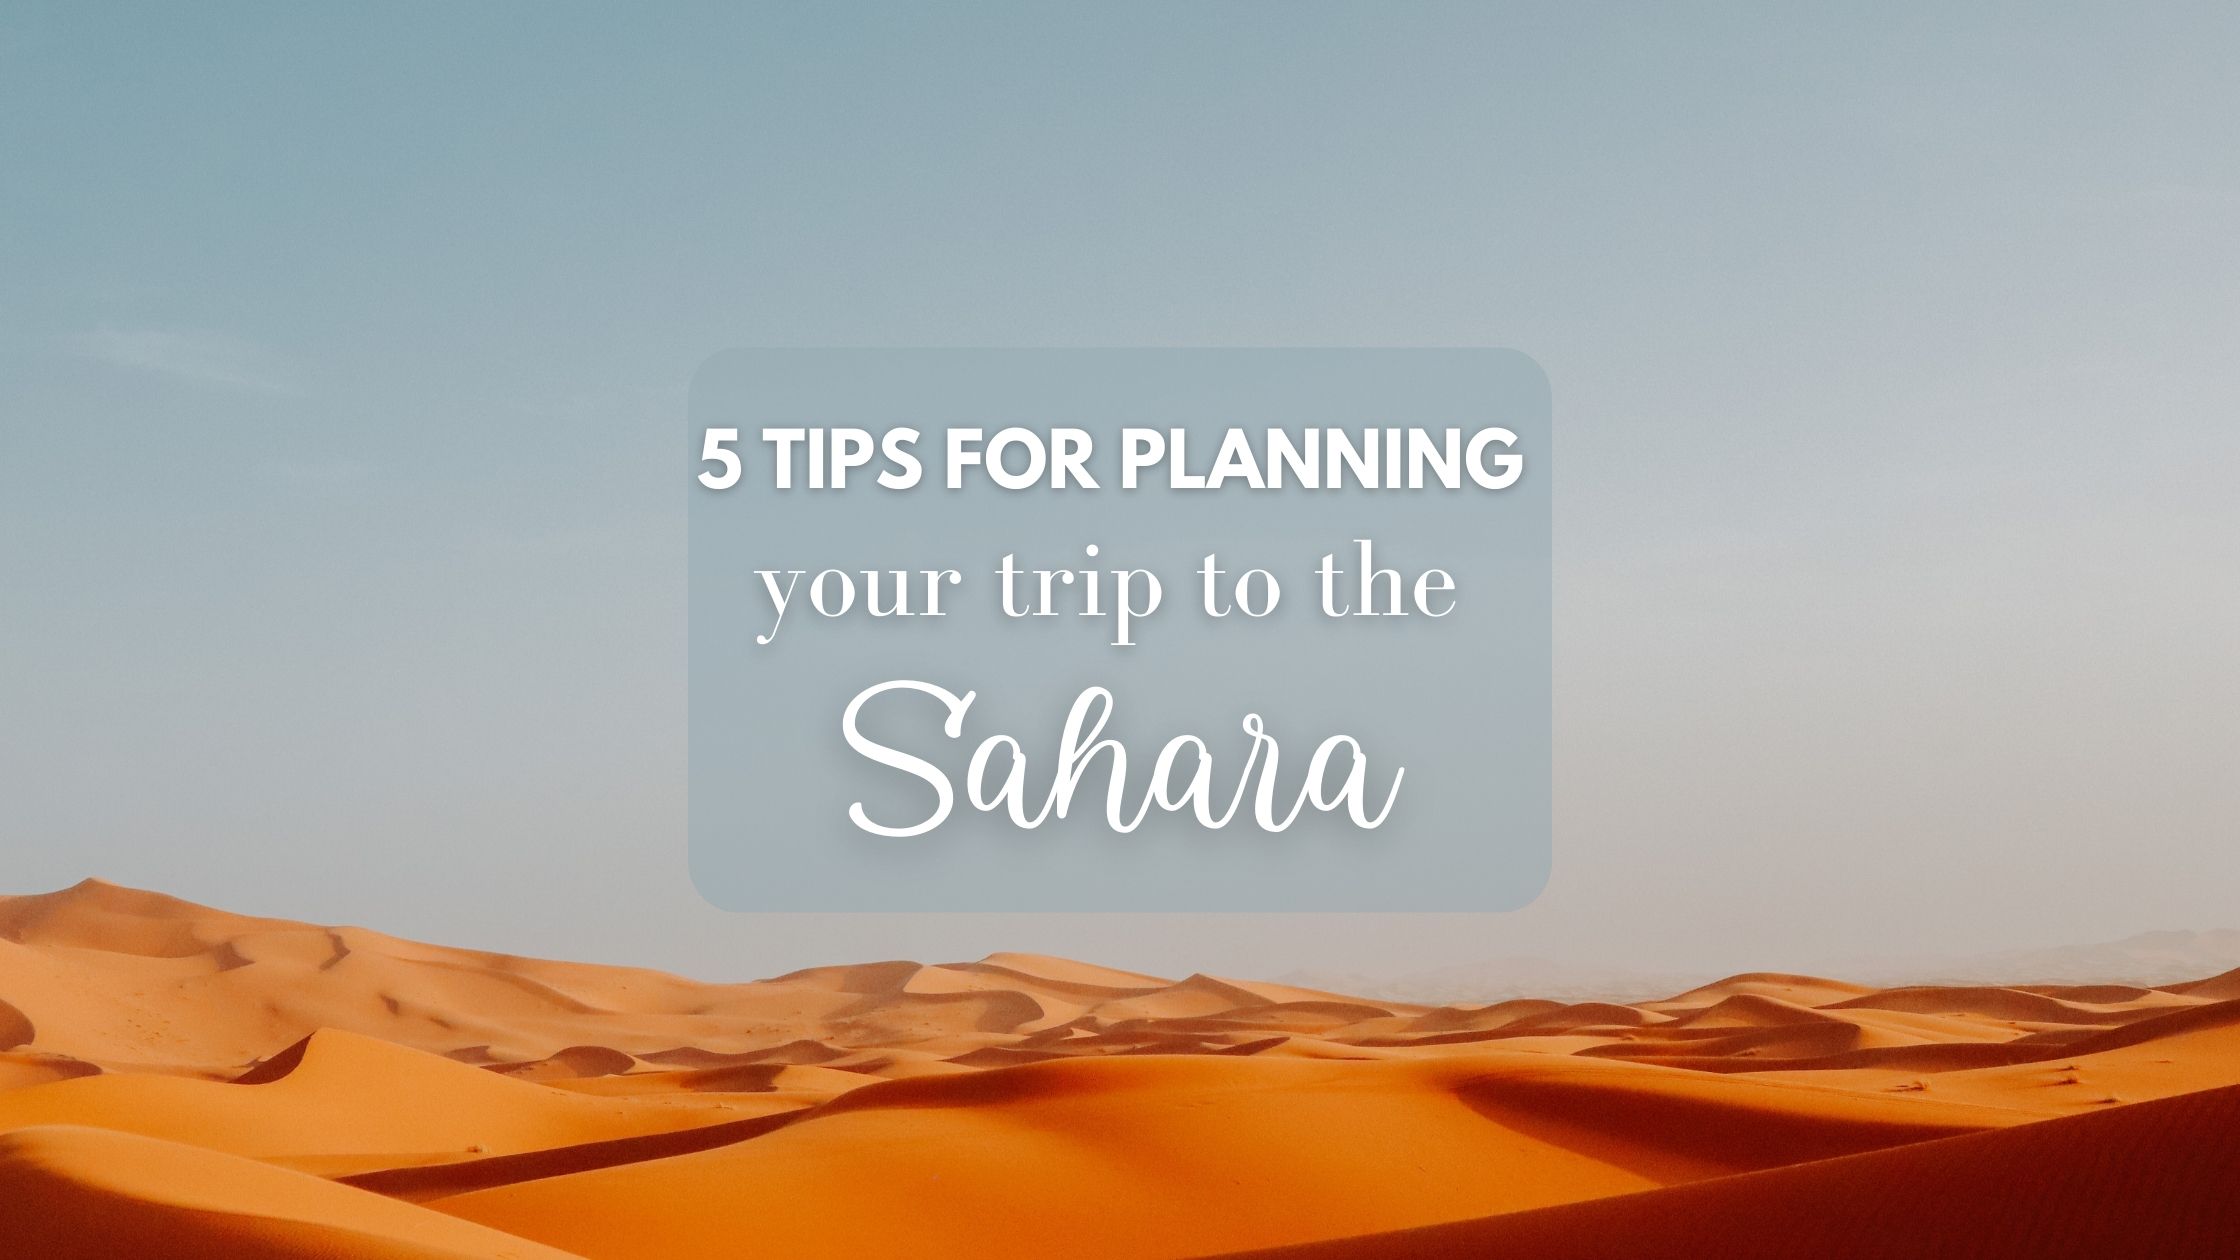 Planning an epic trip to the Sahara Desert La VagaBlonde